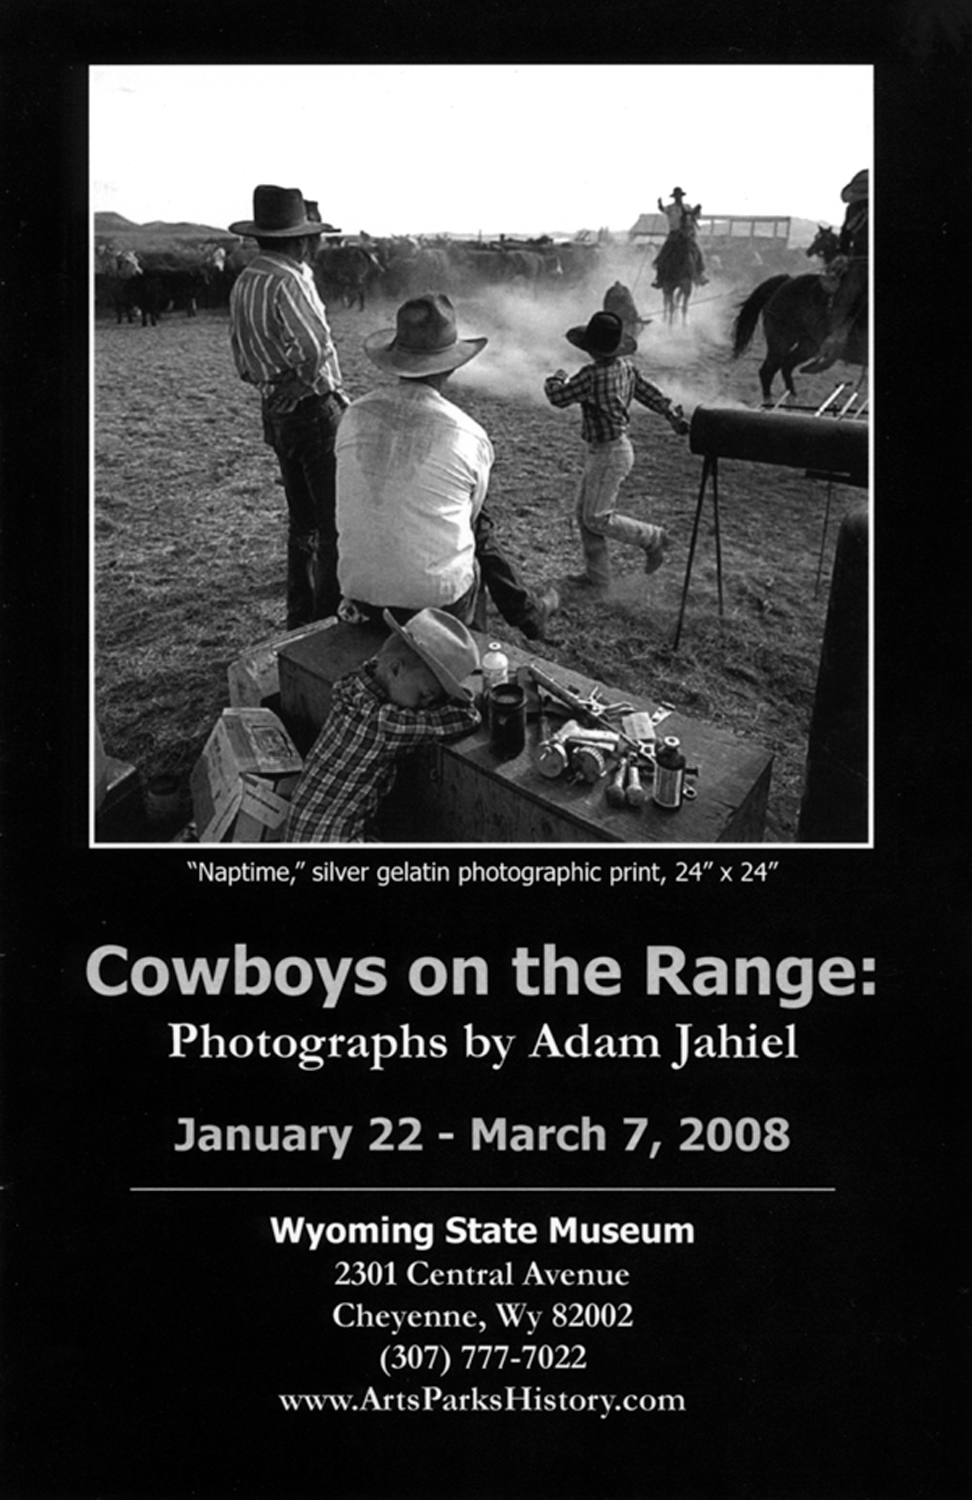 Wyoming State Museum, Cheyenne, WY  - The Last Cowboy - Adam Jahiel - 2008